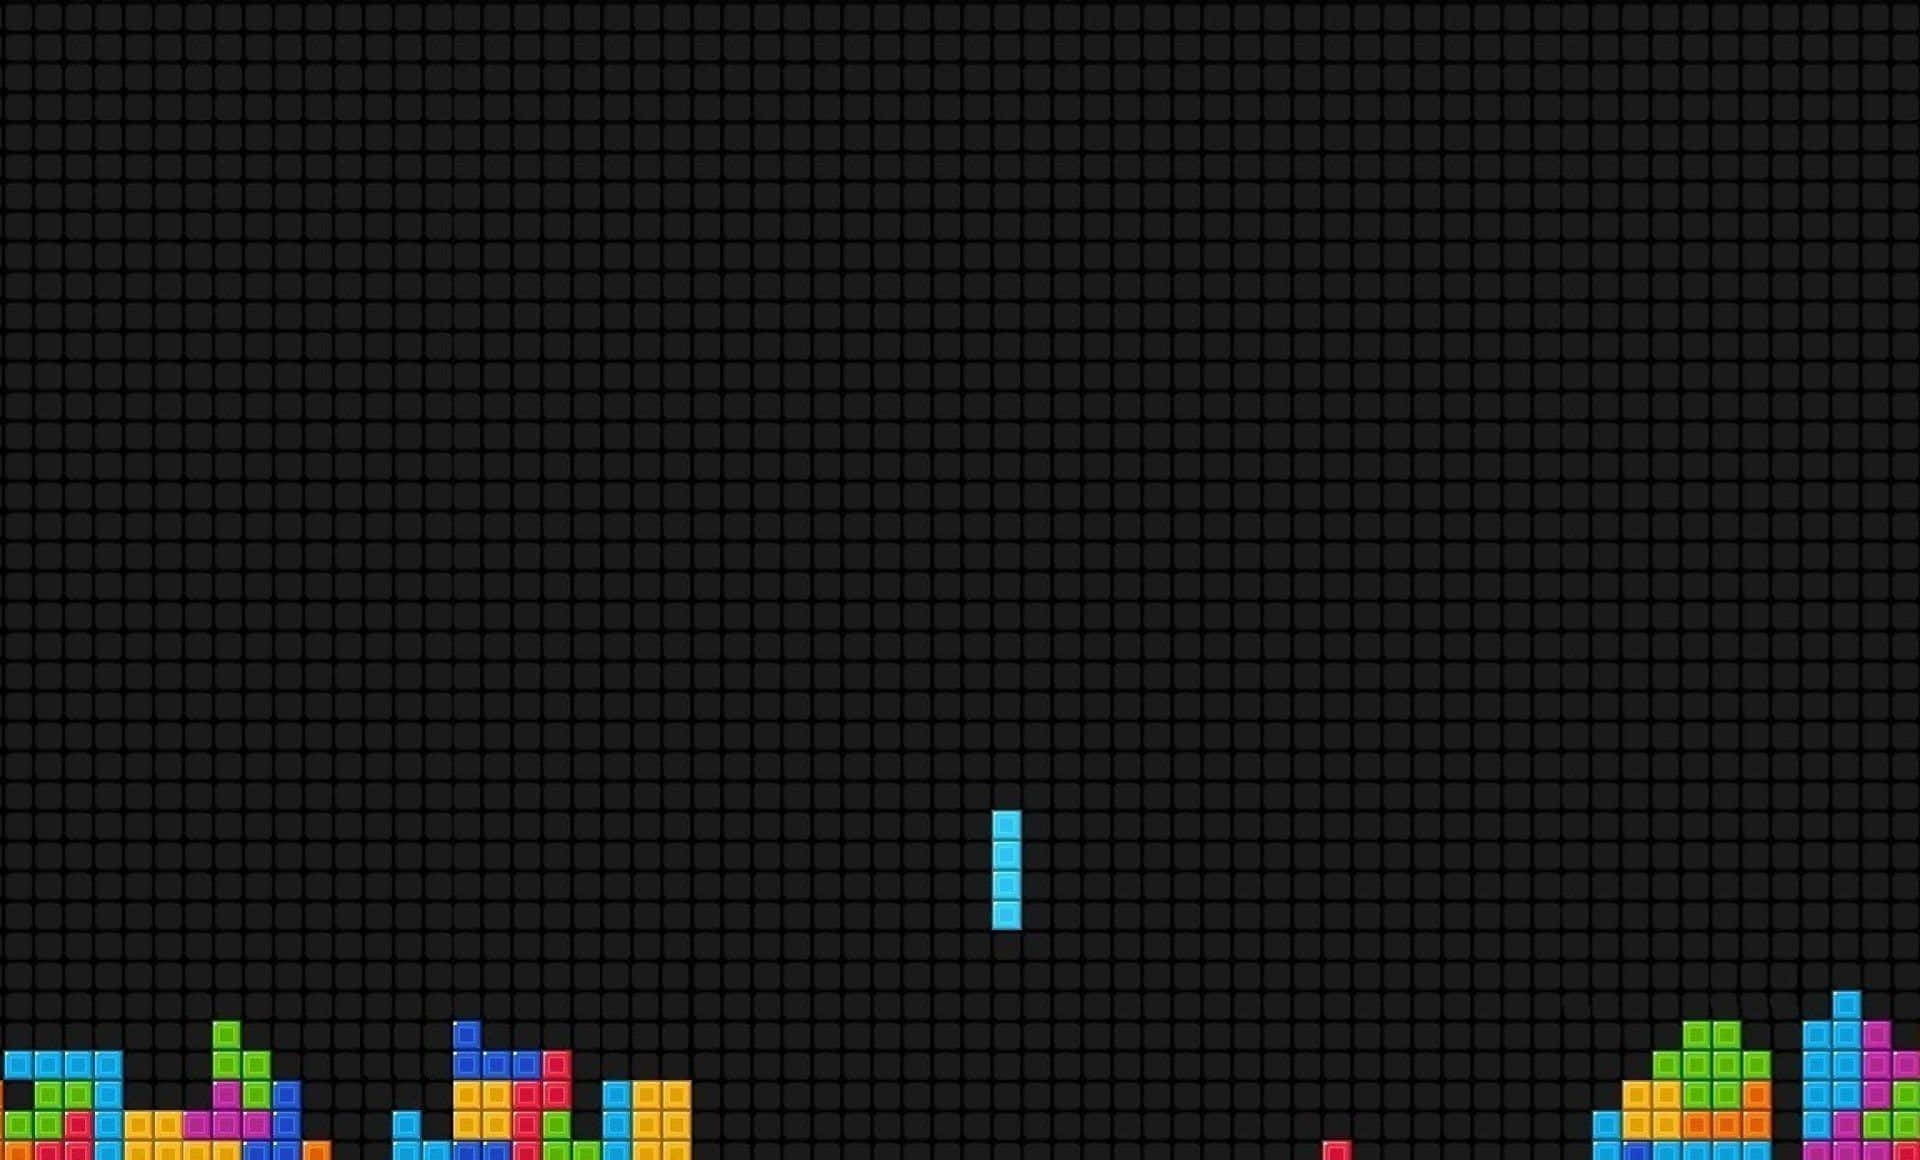 Classic Tetris Game in Full Swing